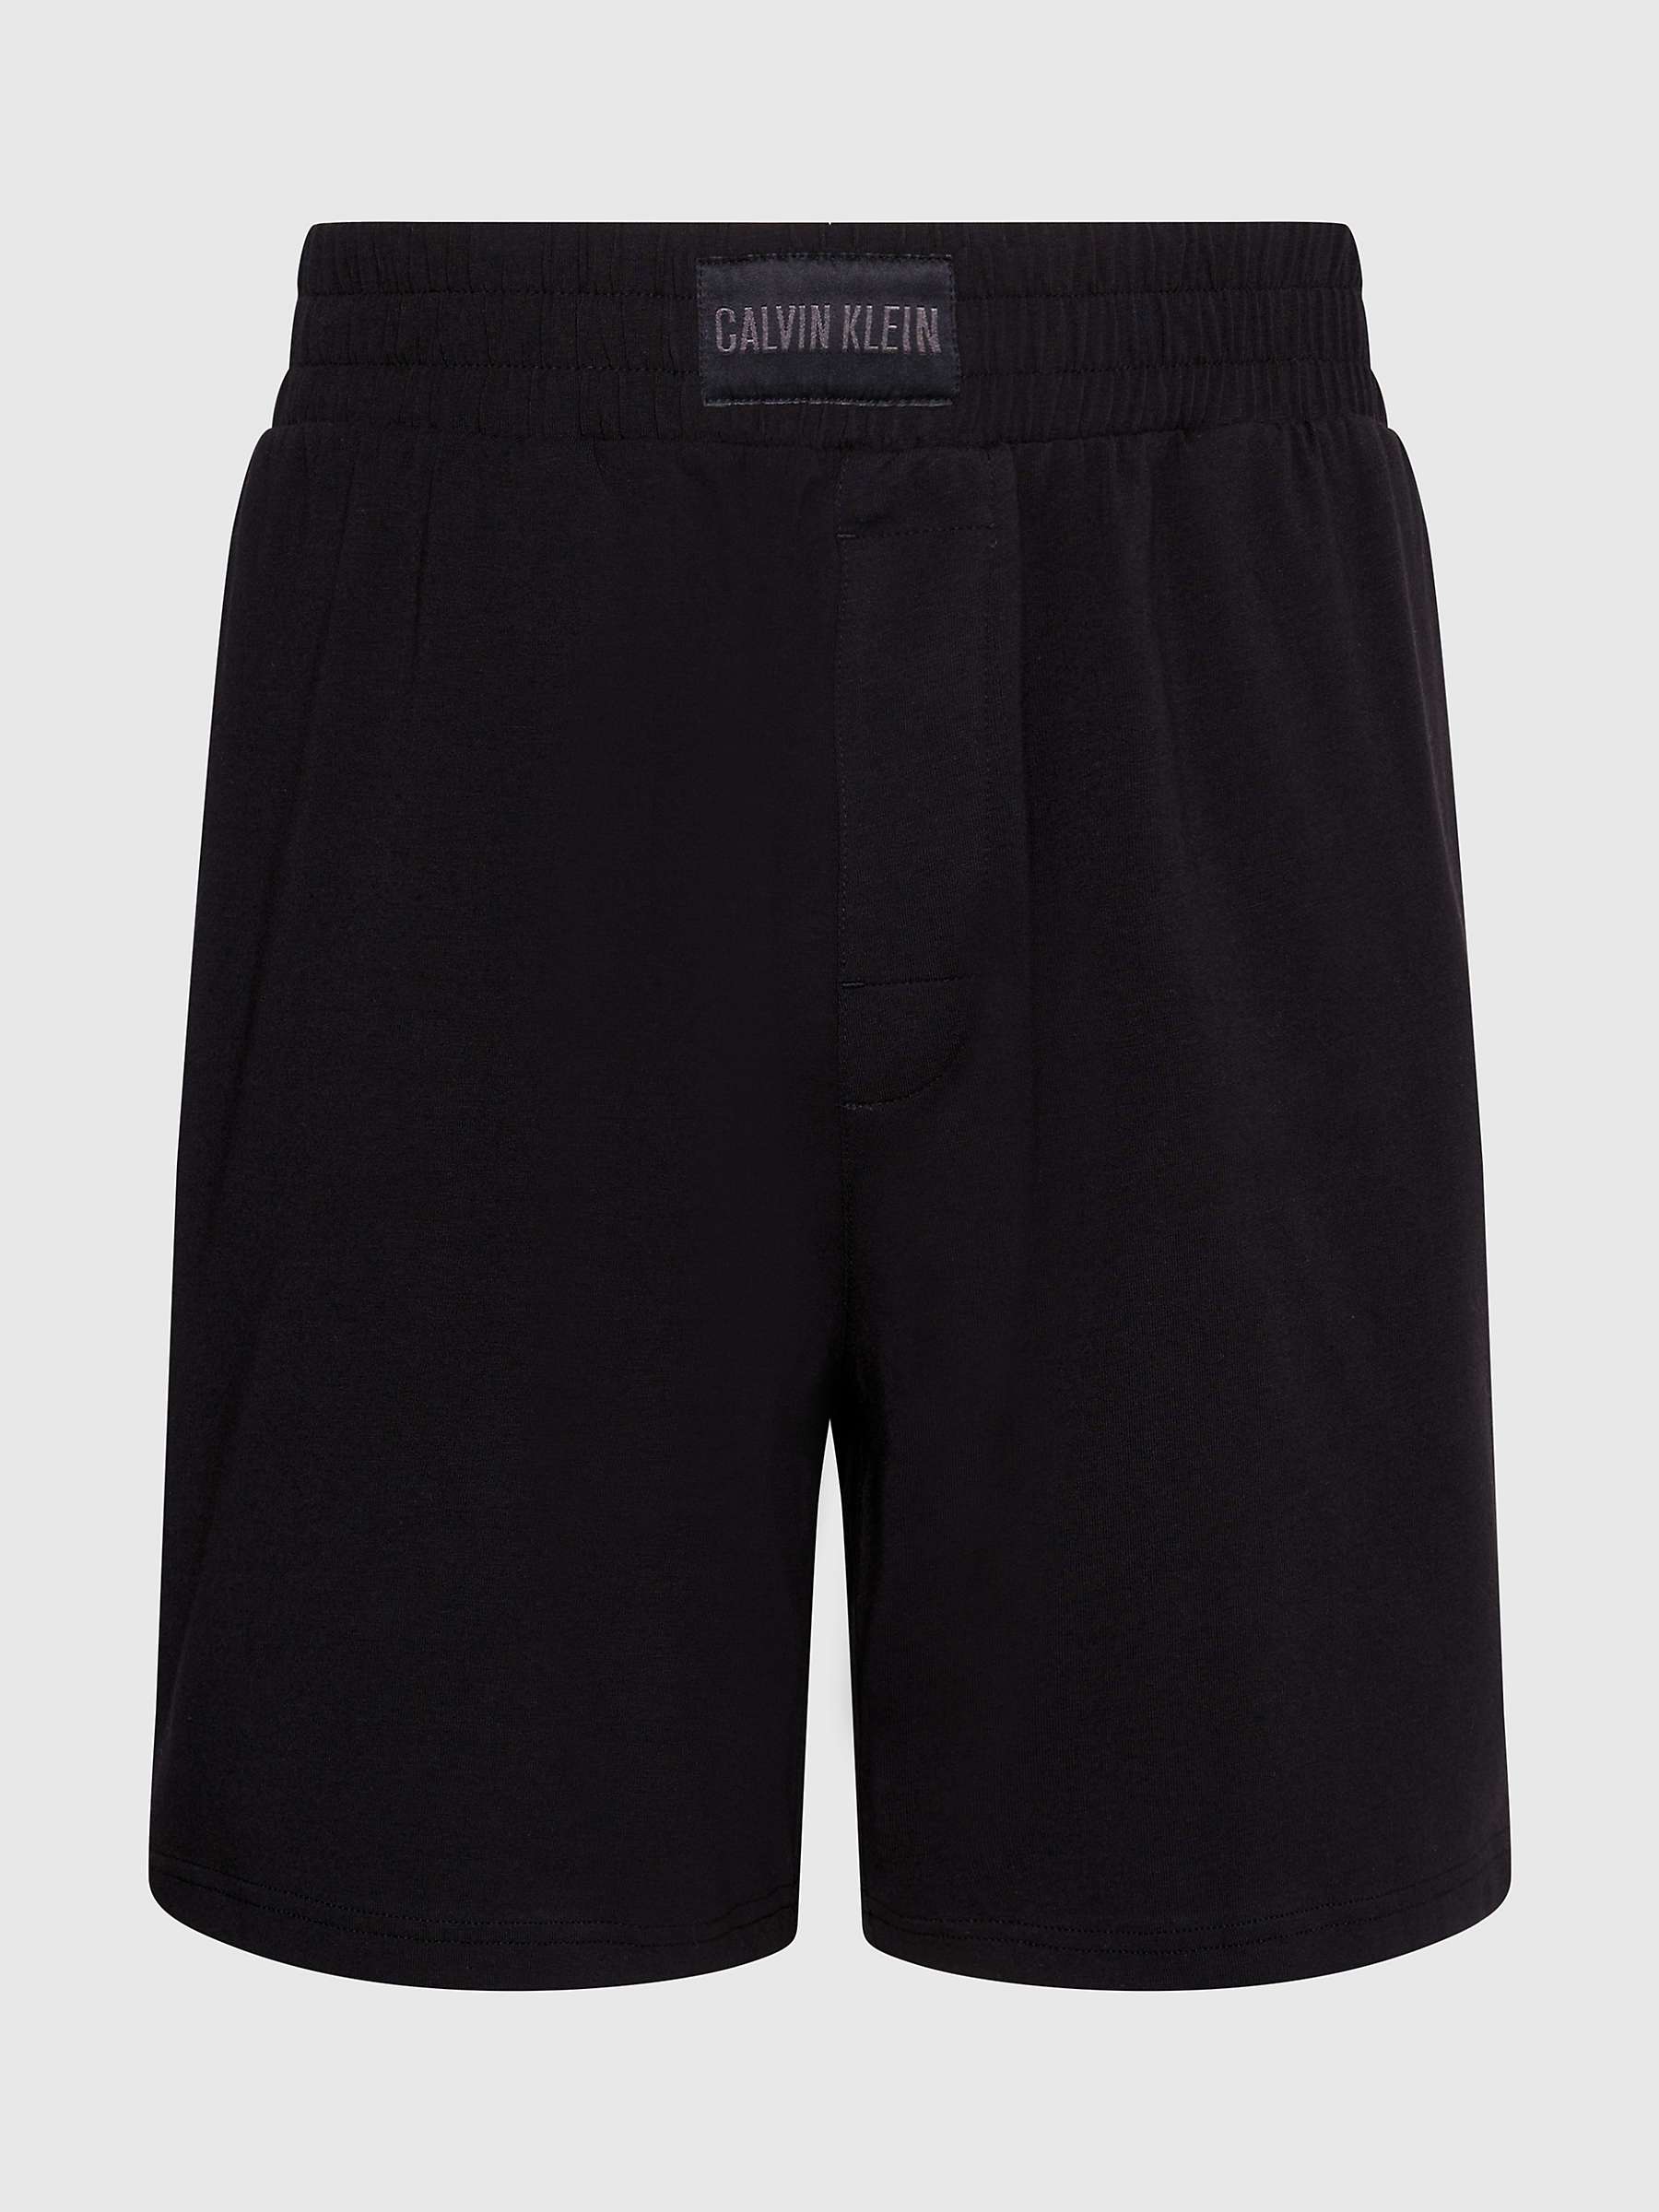 Buy Calvin Klein Organic Cotton Blend Sleep Shorts, Black Online at johnlewis.com